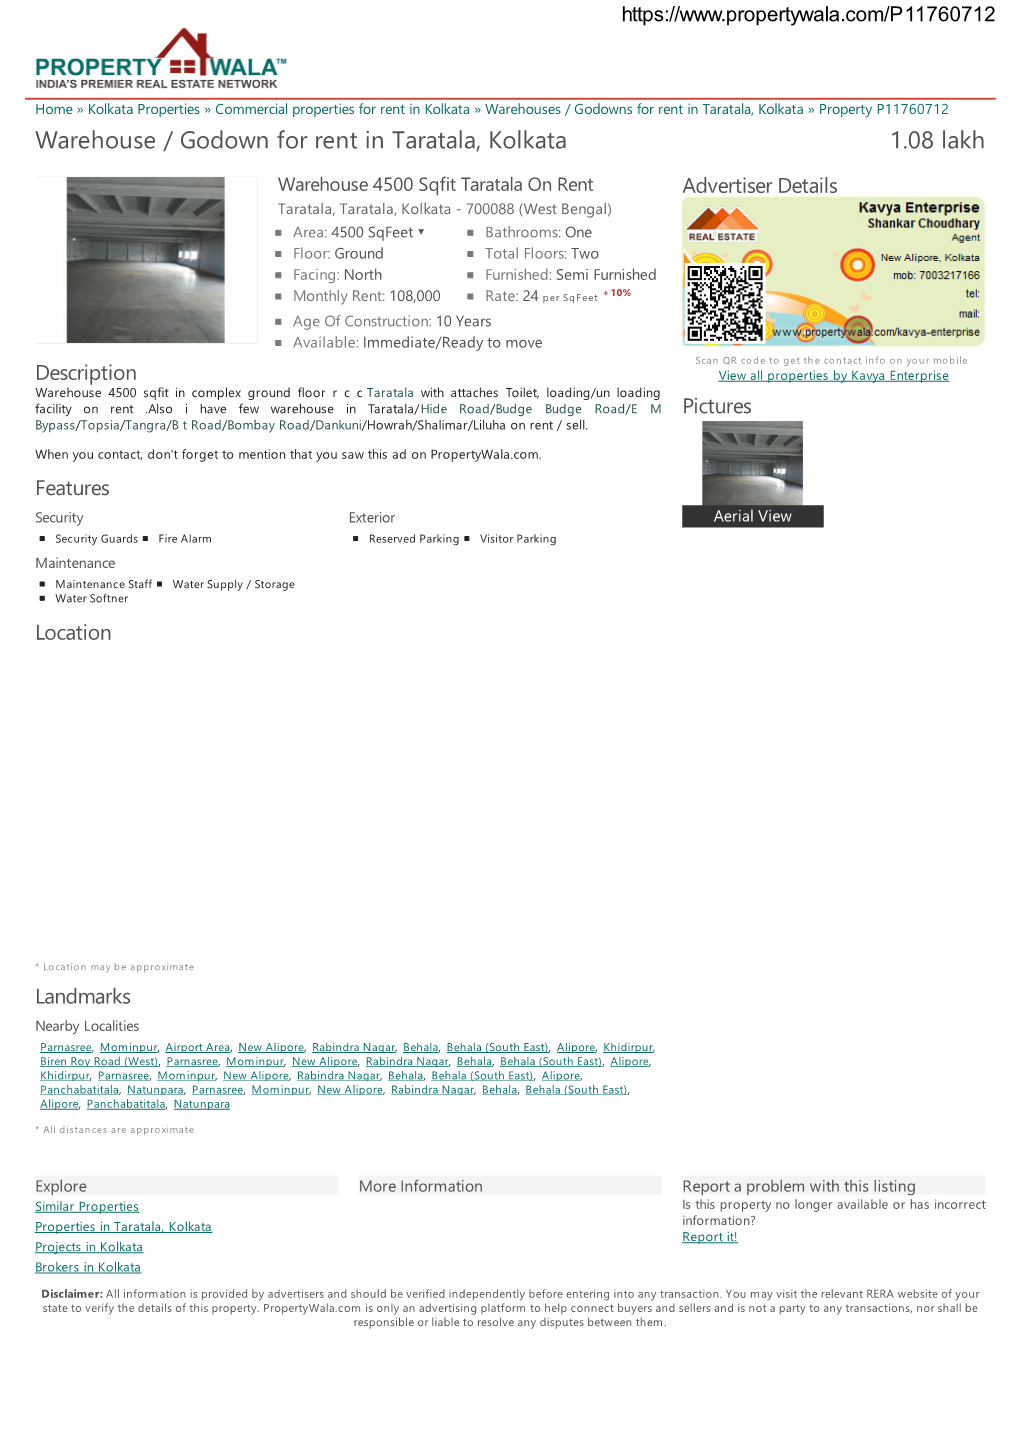 Warehouse / Godown for Rent in Taratala, Kolkata (P11760712